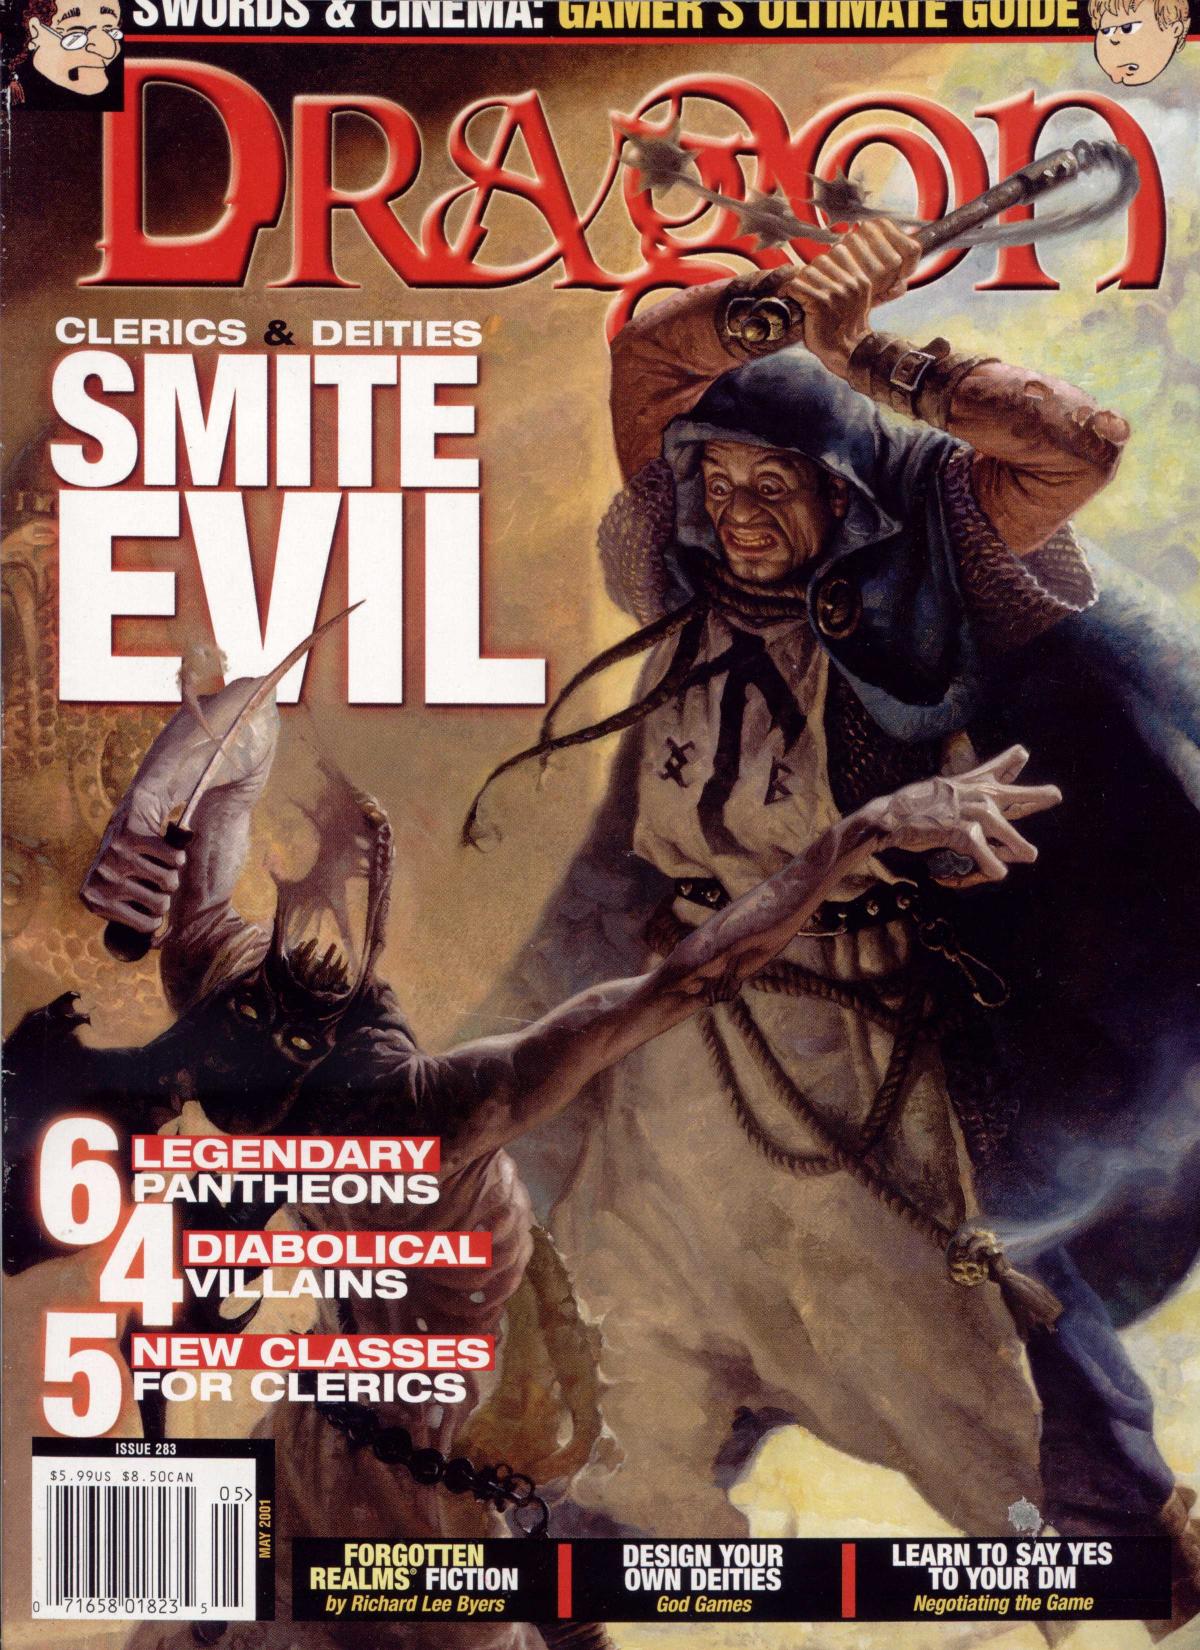 Dragon Magazine #283